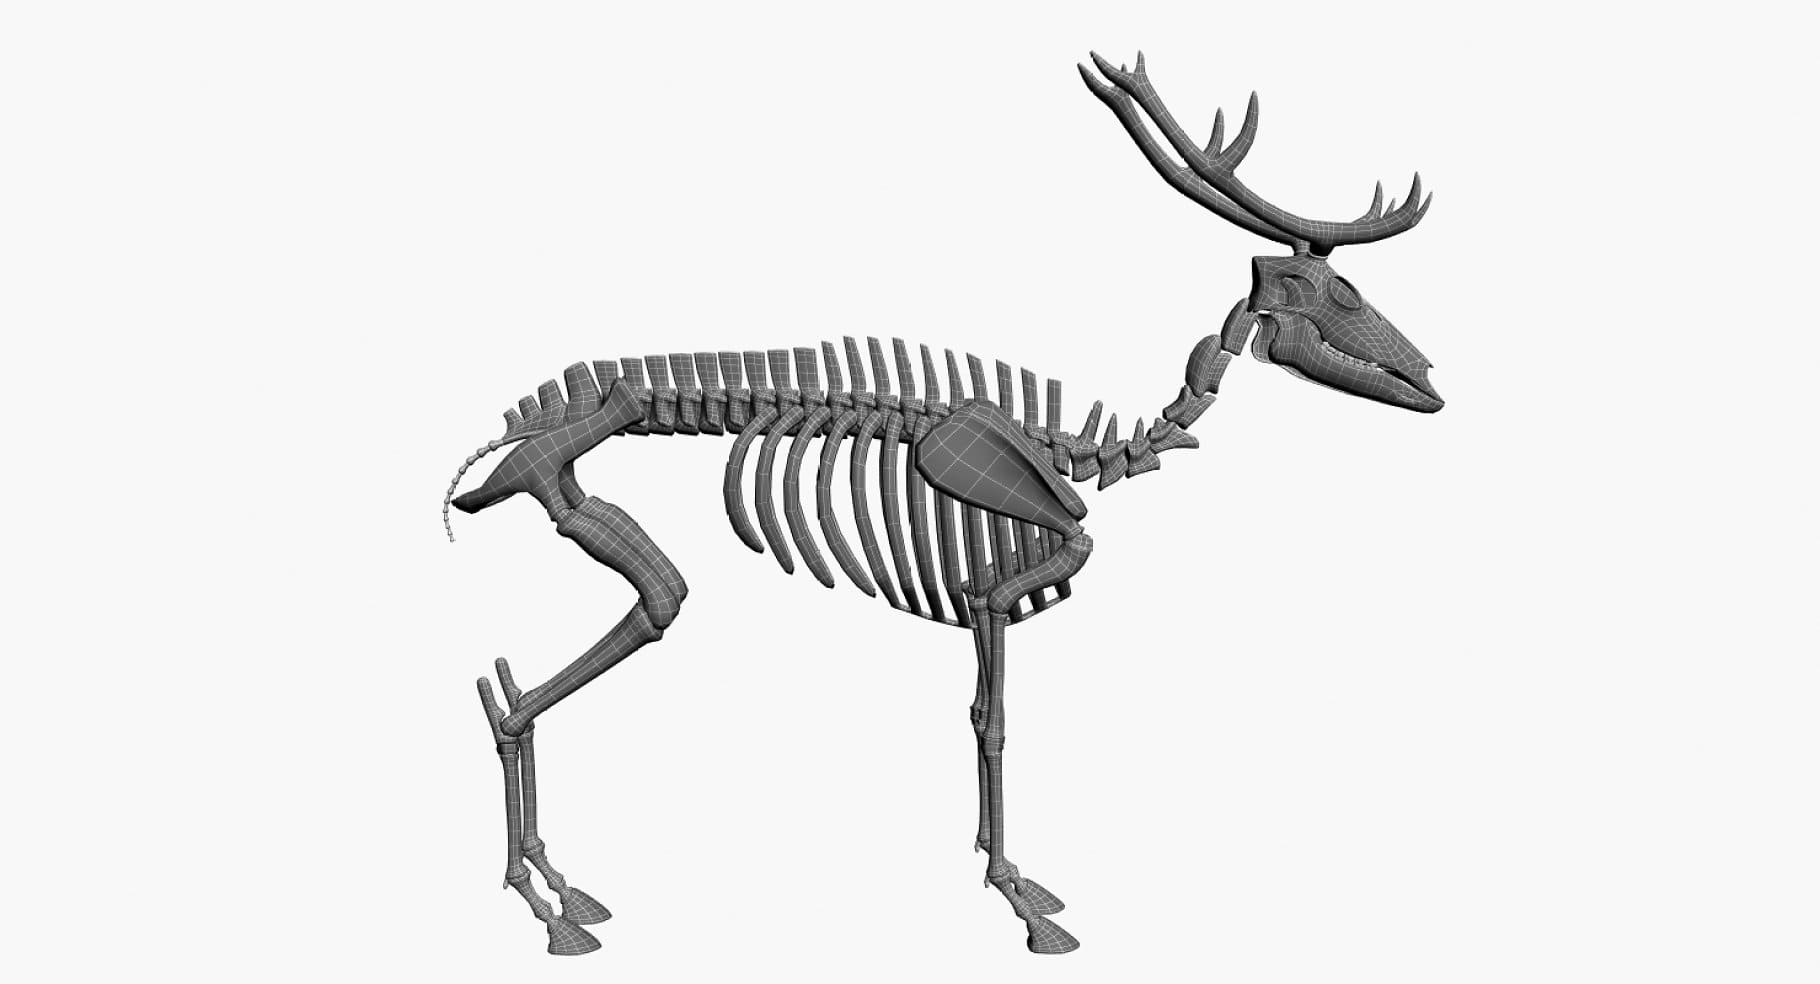 Image of a dark gray 3D model of a deer skeleton.